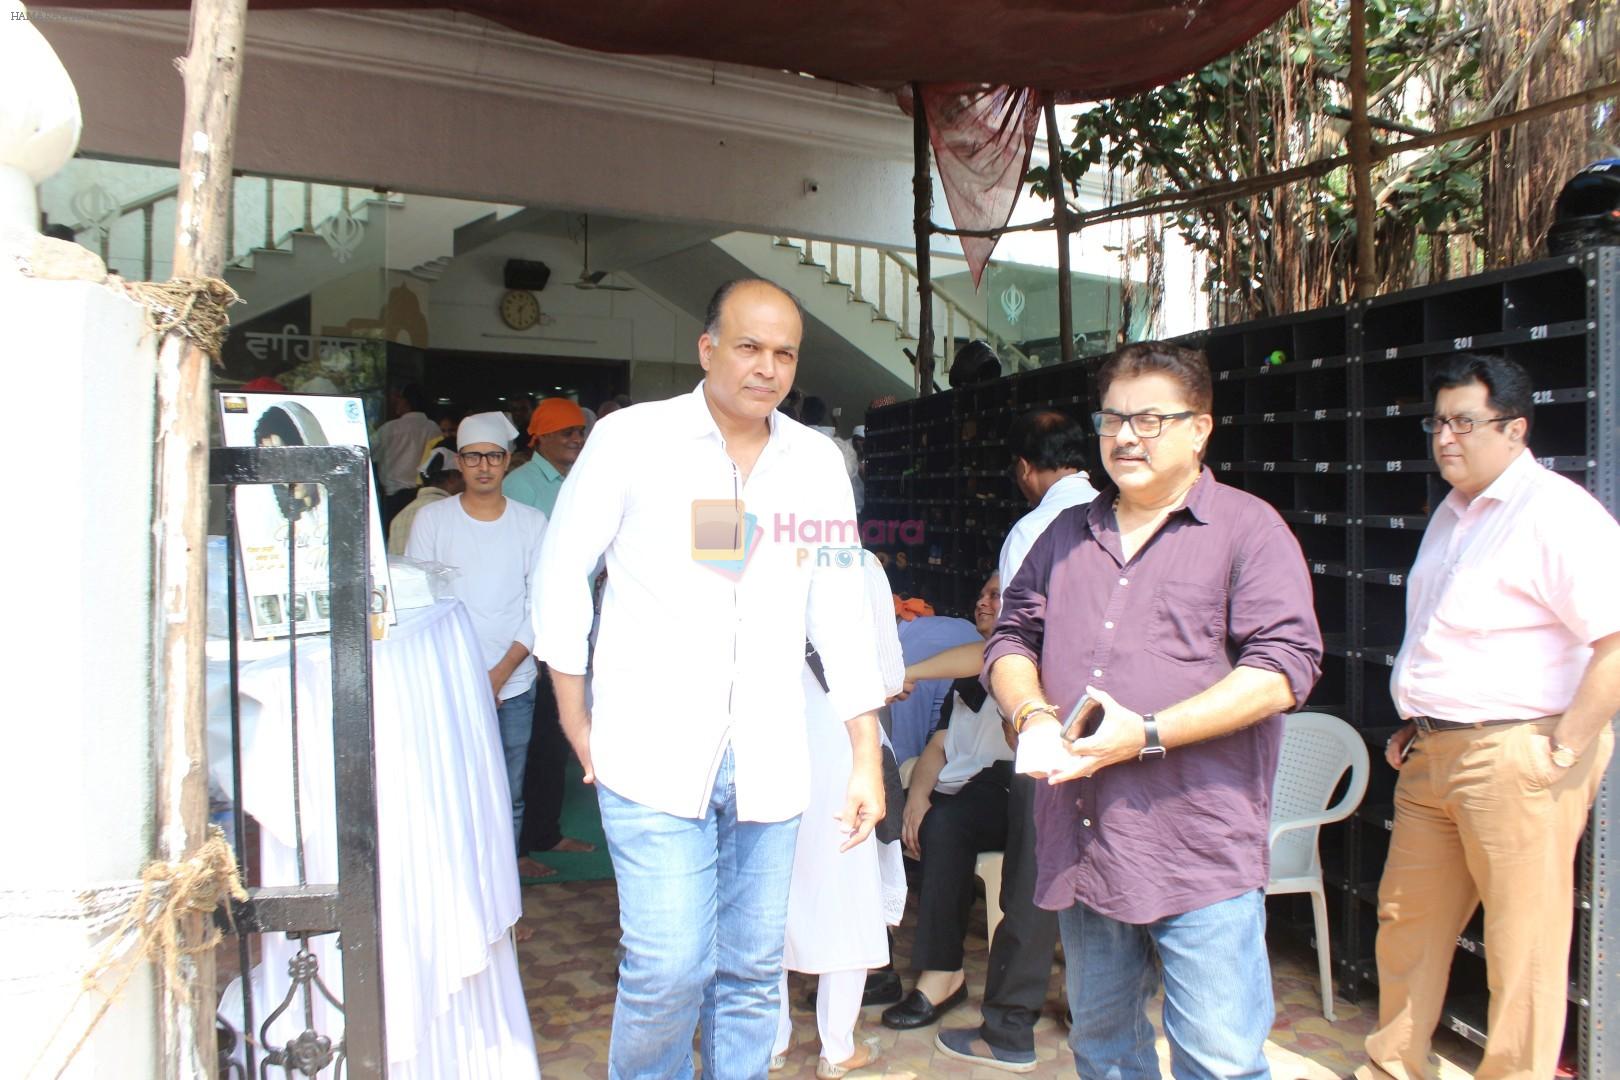 Ashutosh Gowariker attend Chautha Of Lekh Tandon on 17th Oct 2017